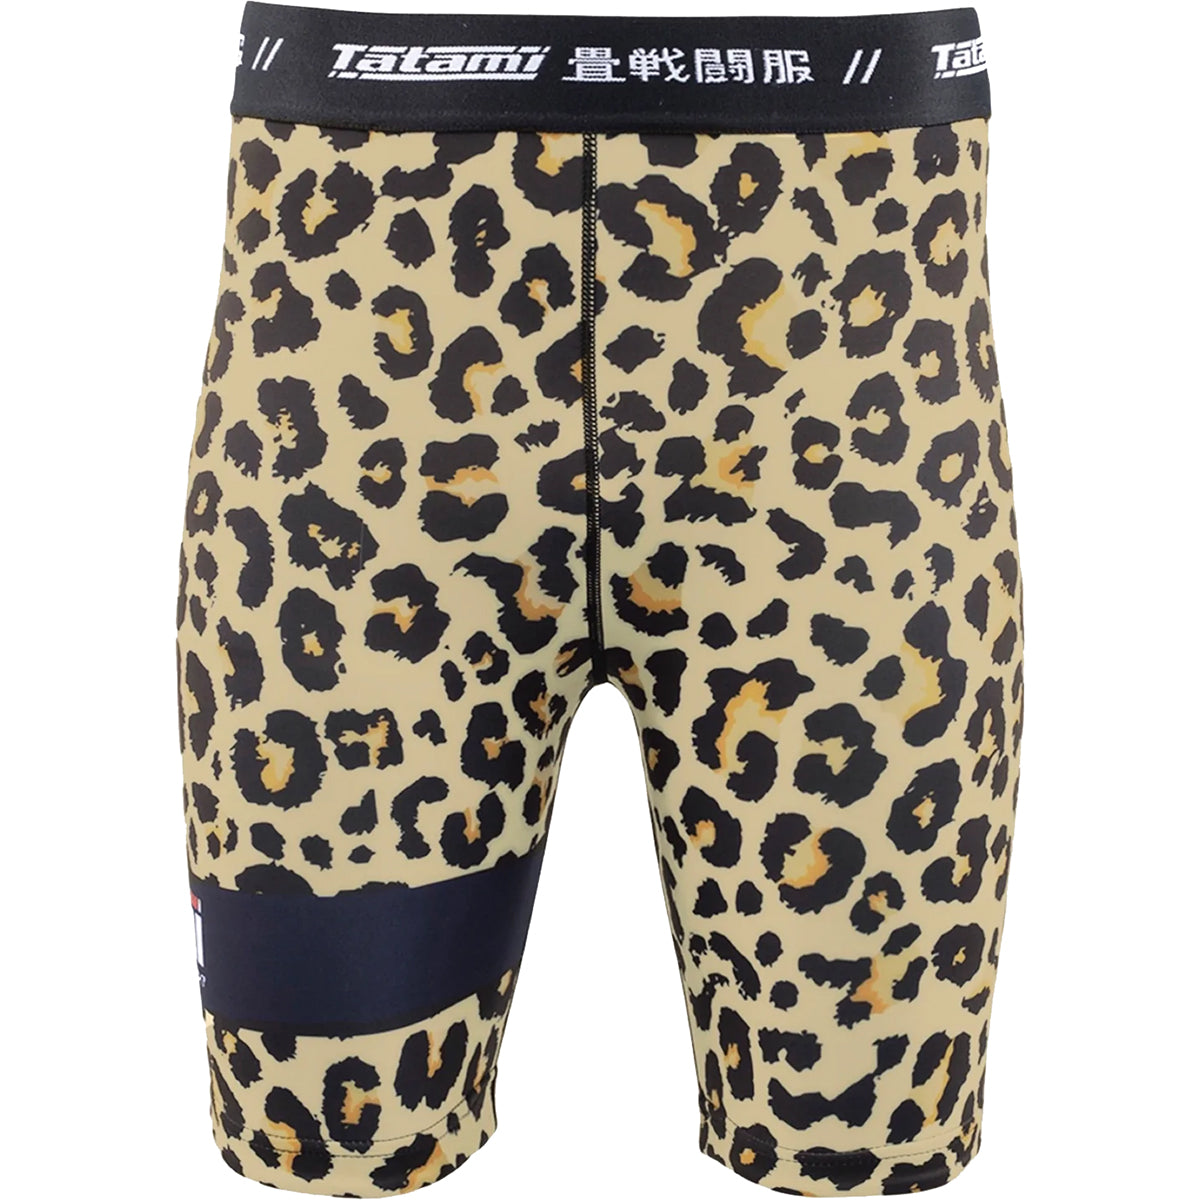 Tatami Fightwear Recharge Vale Tudo Shorts - Leopard Tatami Fightwear